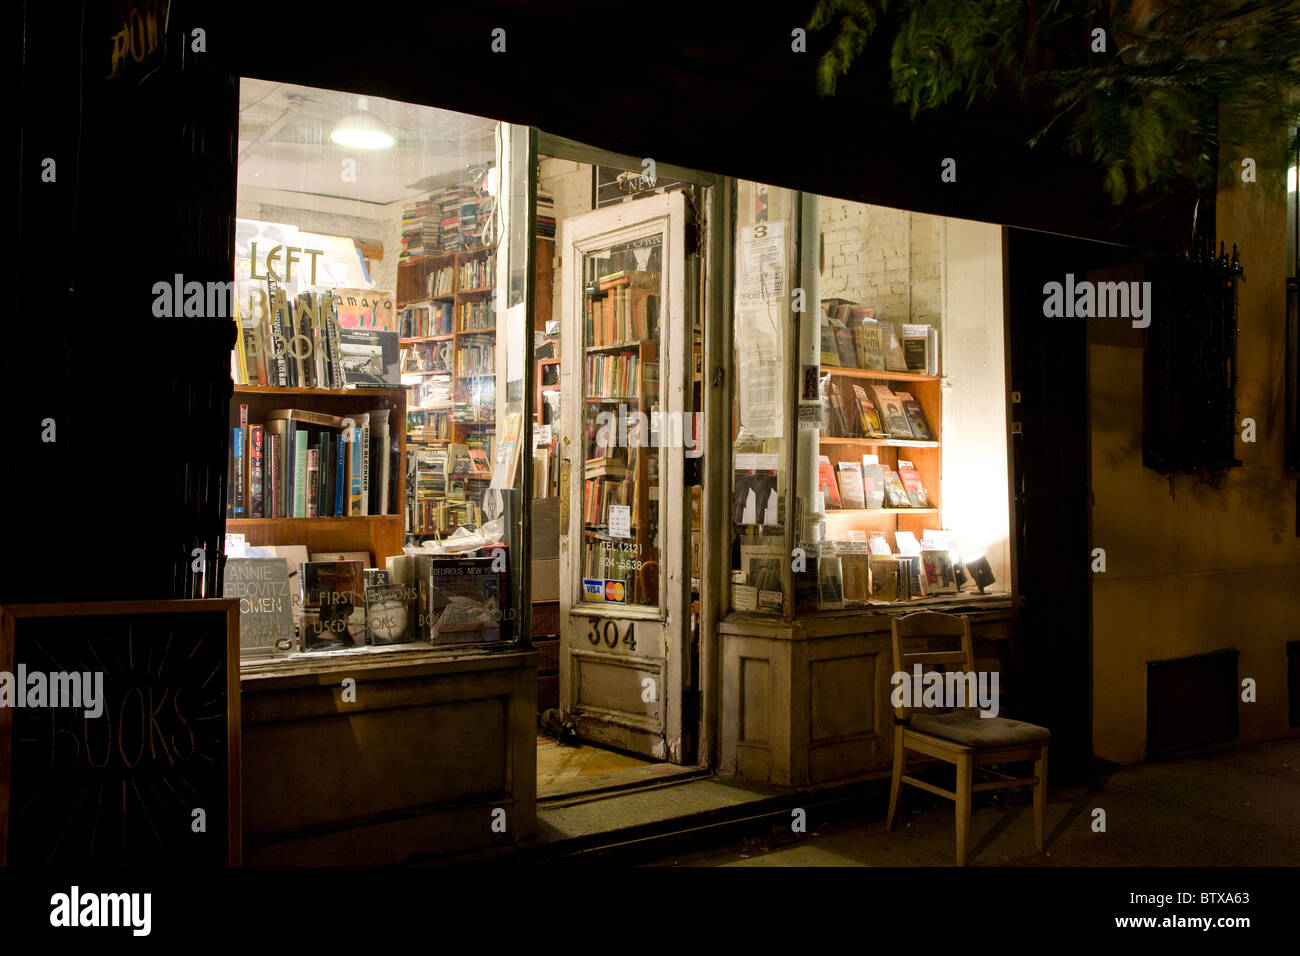 Left Bank Bookstore, Greenwich Village Stock Photo